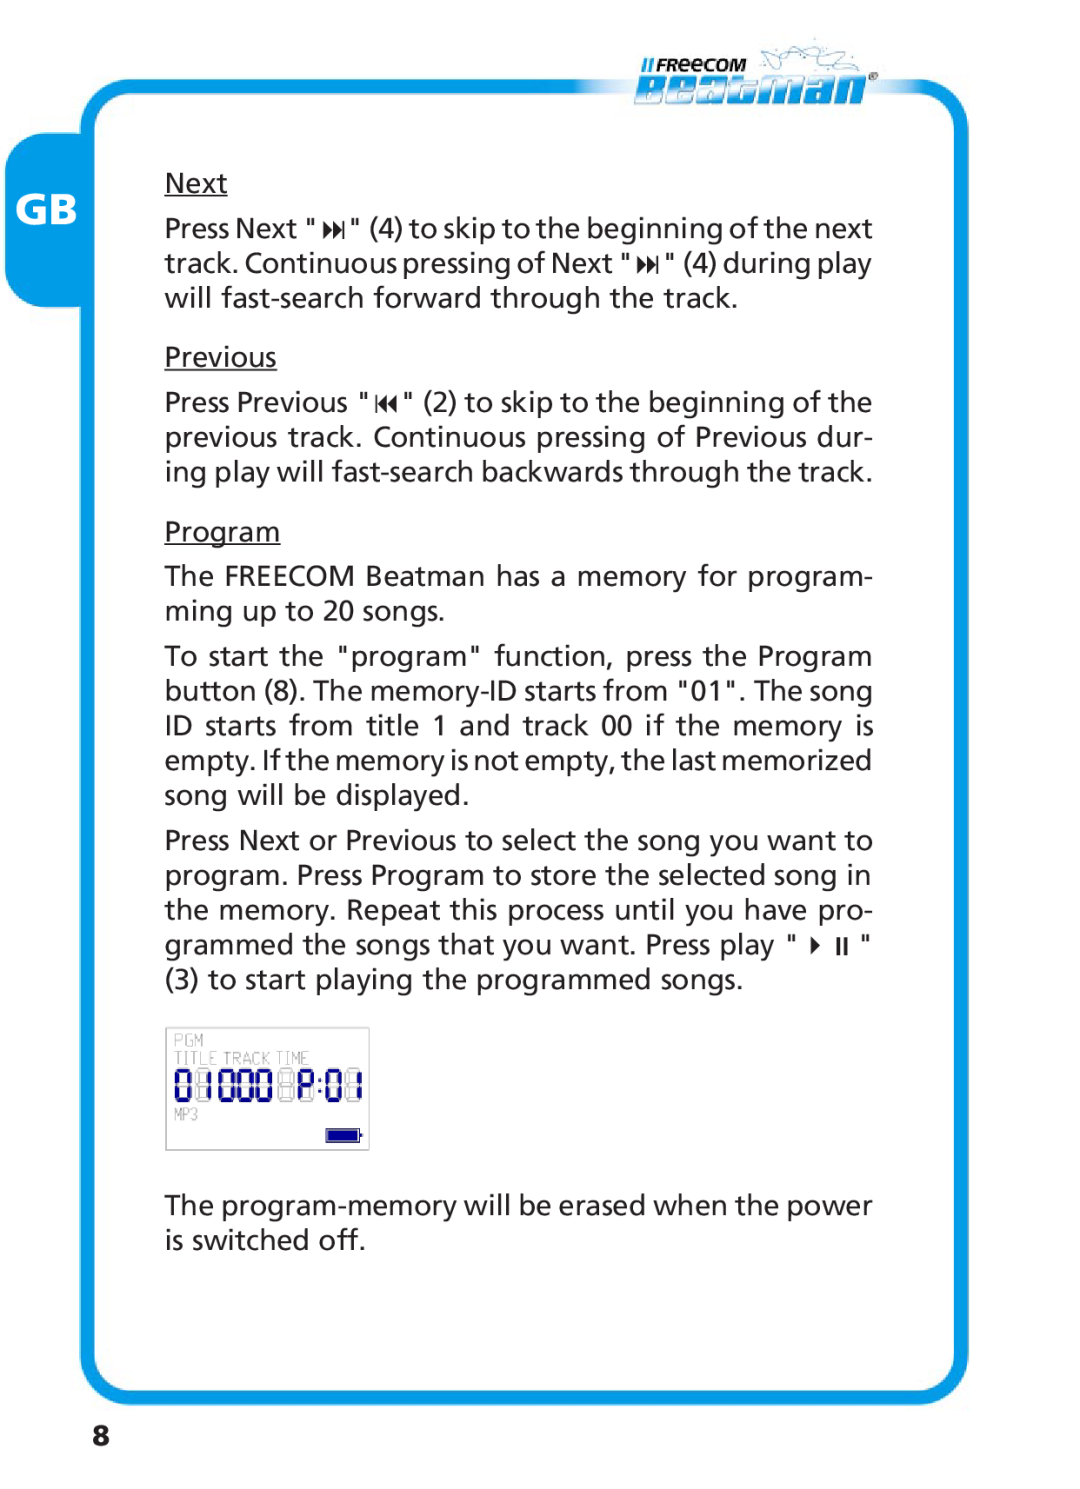 Freecom Technologies Beatman Mini CD I manual Next, Previous, Program, to start playing the programmed songs 